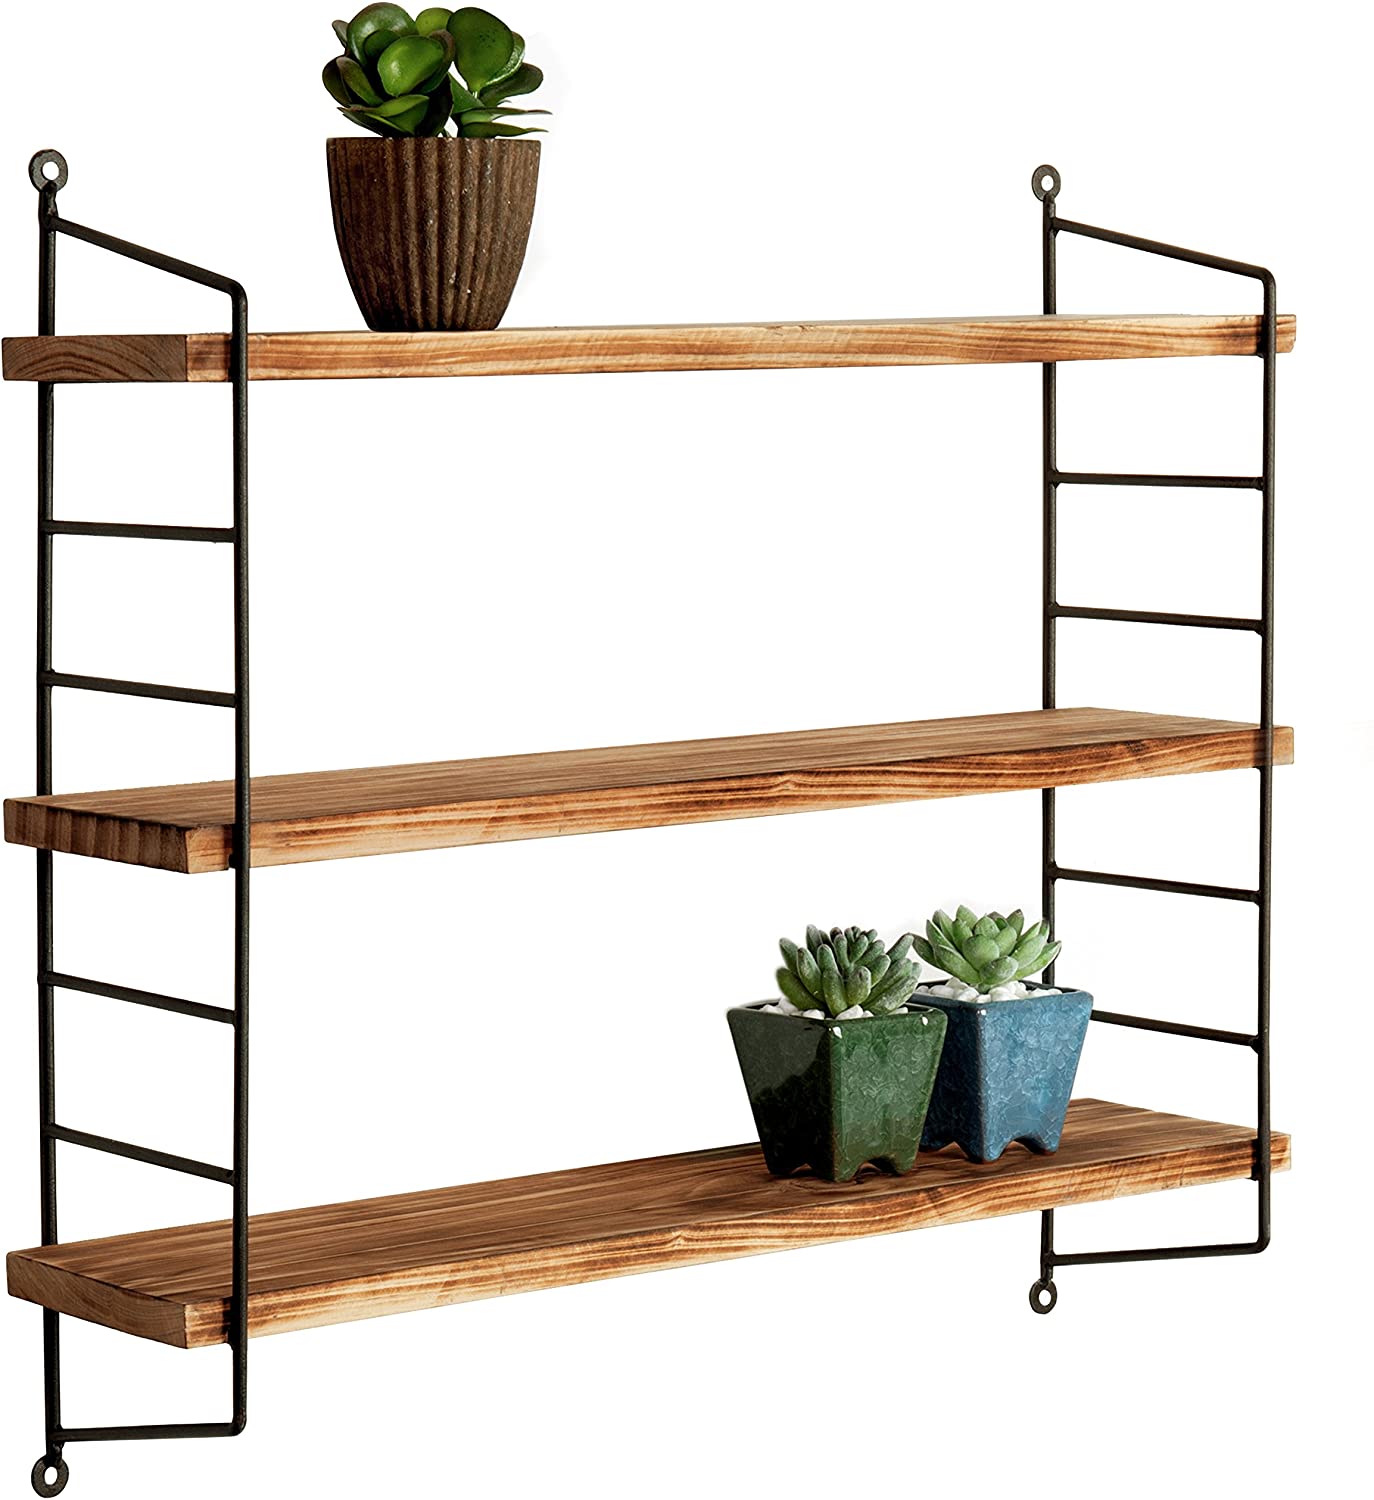 Wood Hanging Corner Shelf 3 Tier Wood Wall Floating Shelves Organizer Displays Storage Dark Brown